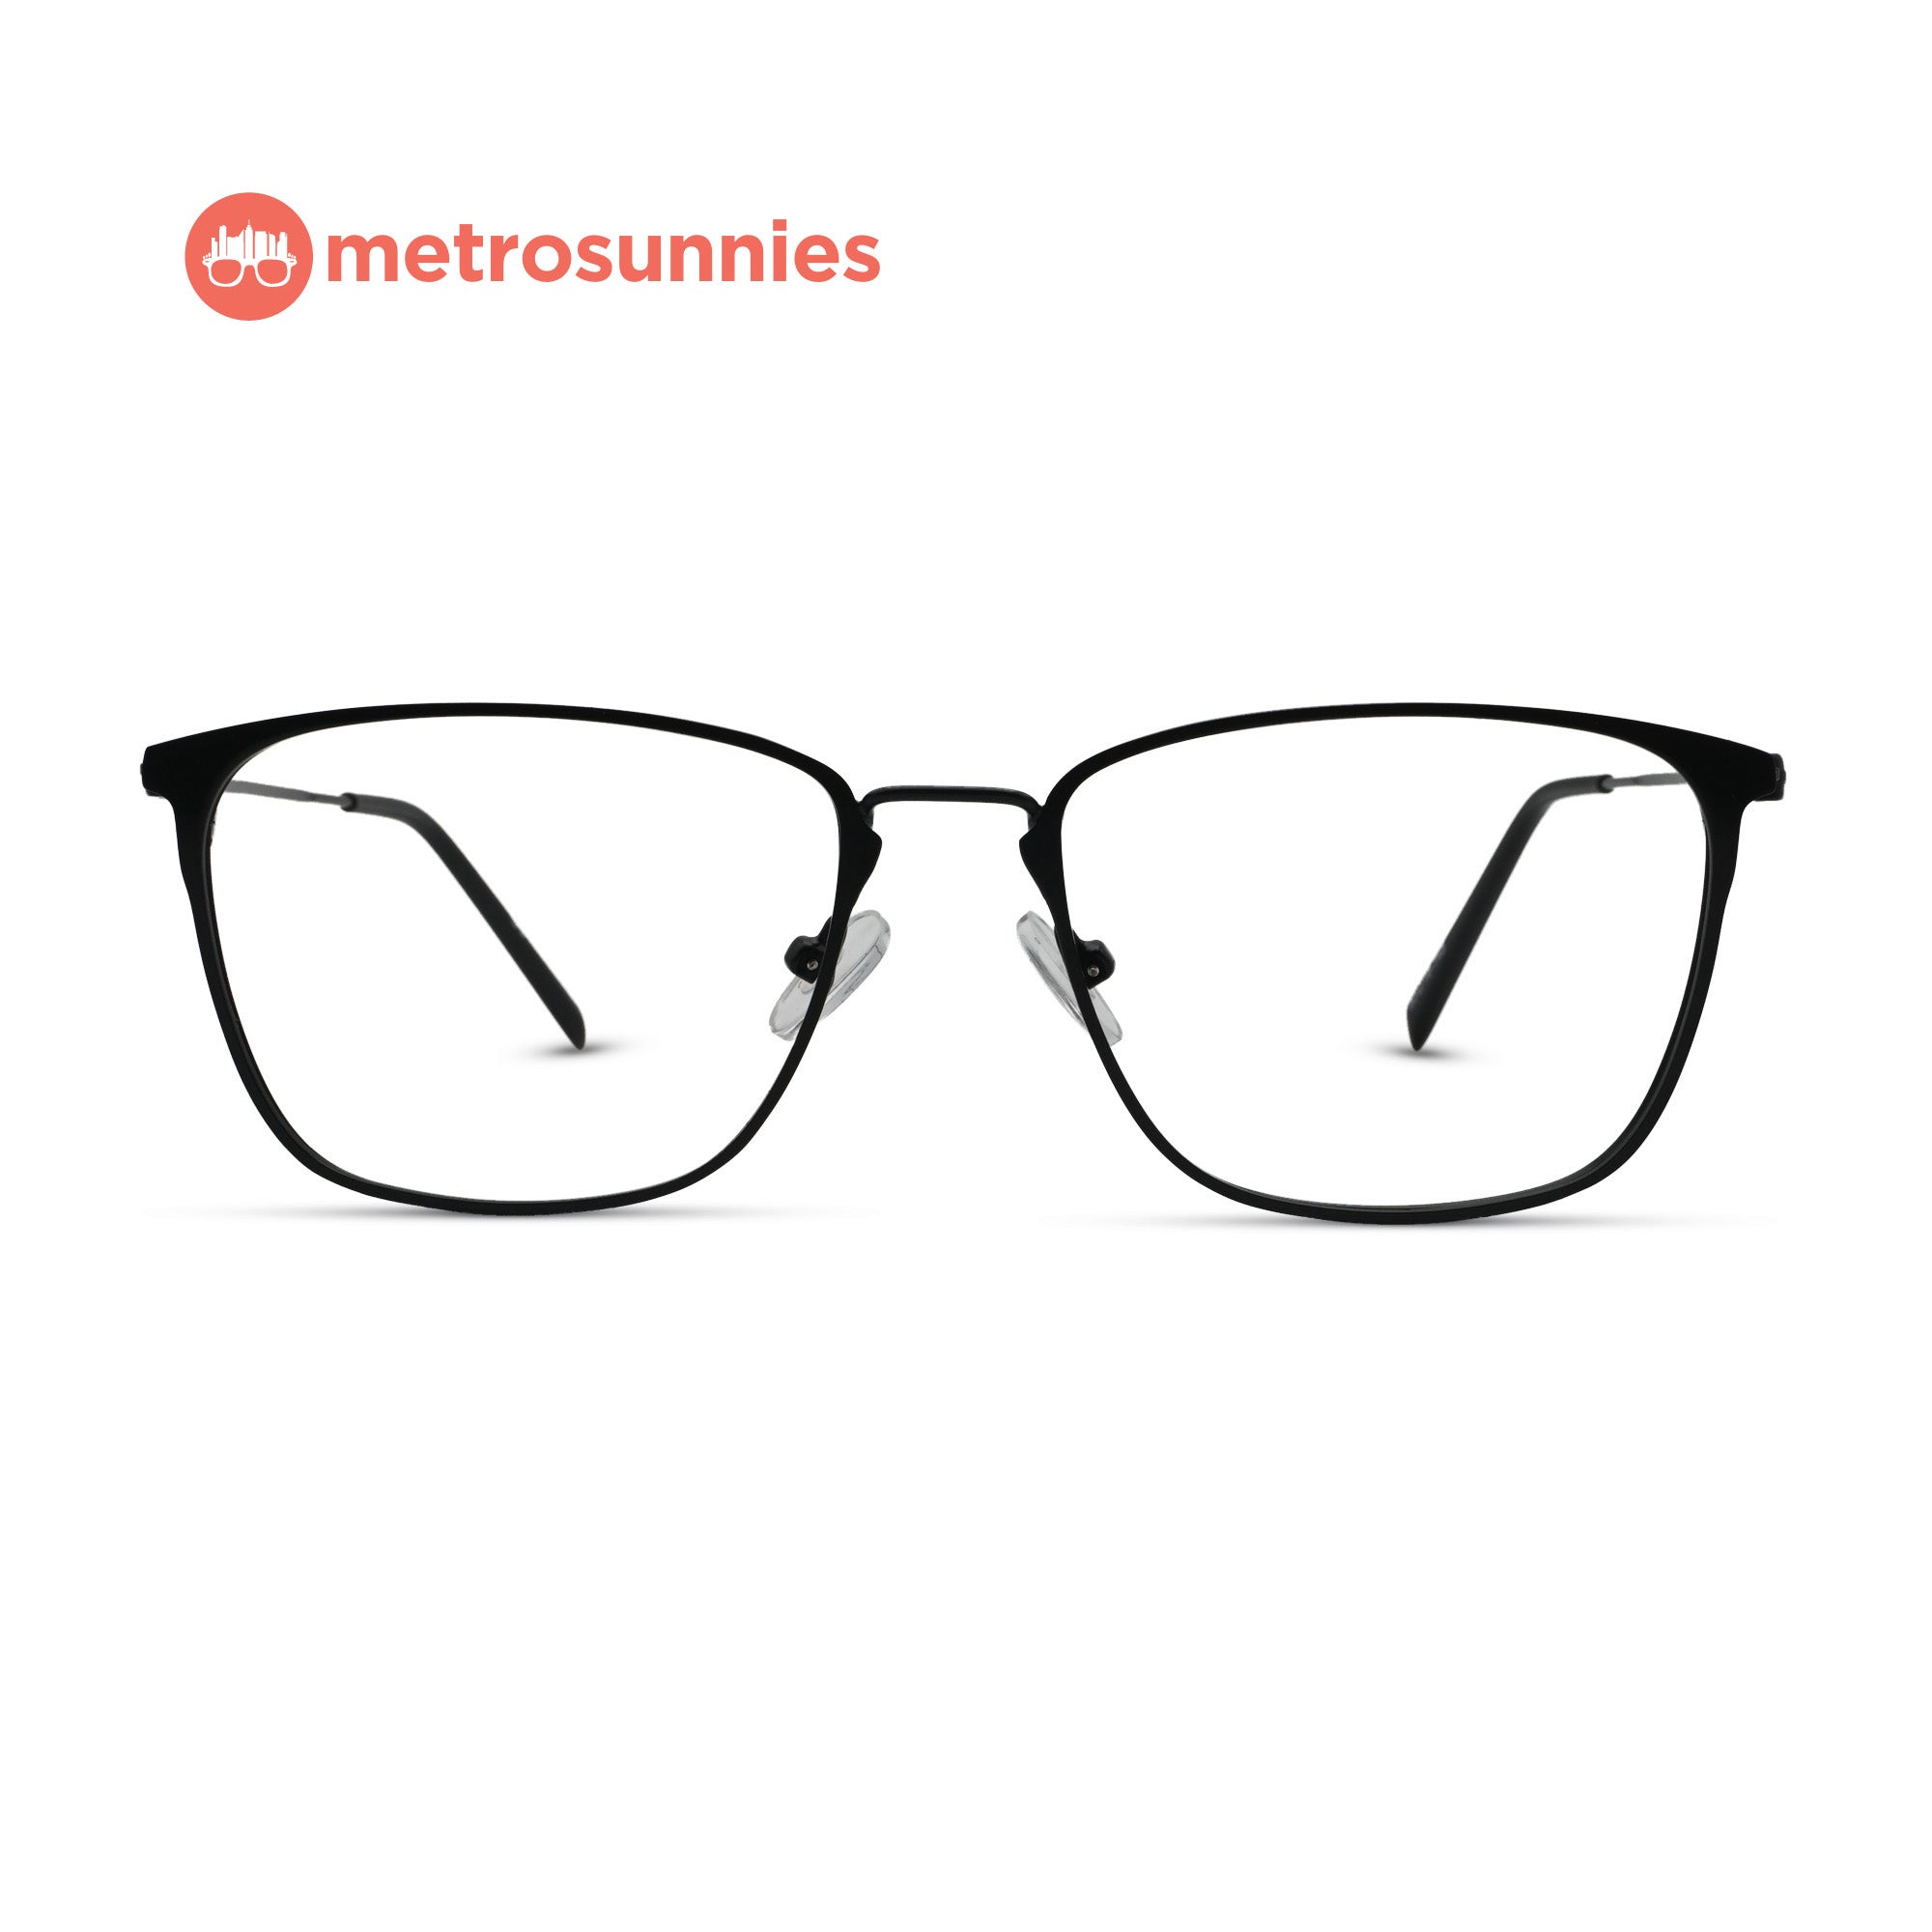 MetroSunnies Tatum Specs (Black) / Replaceable Lens / Eyeglasses for Men and Women